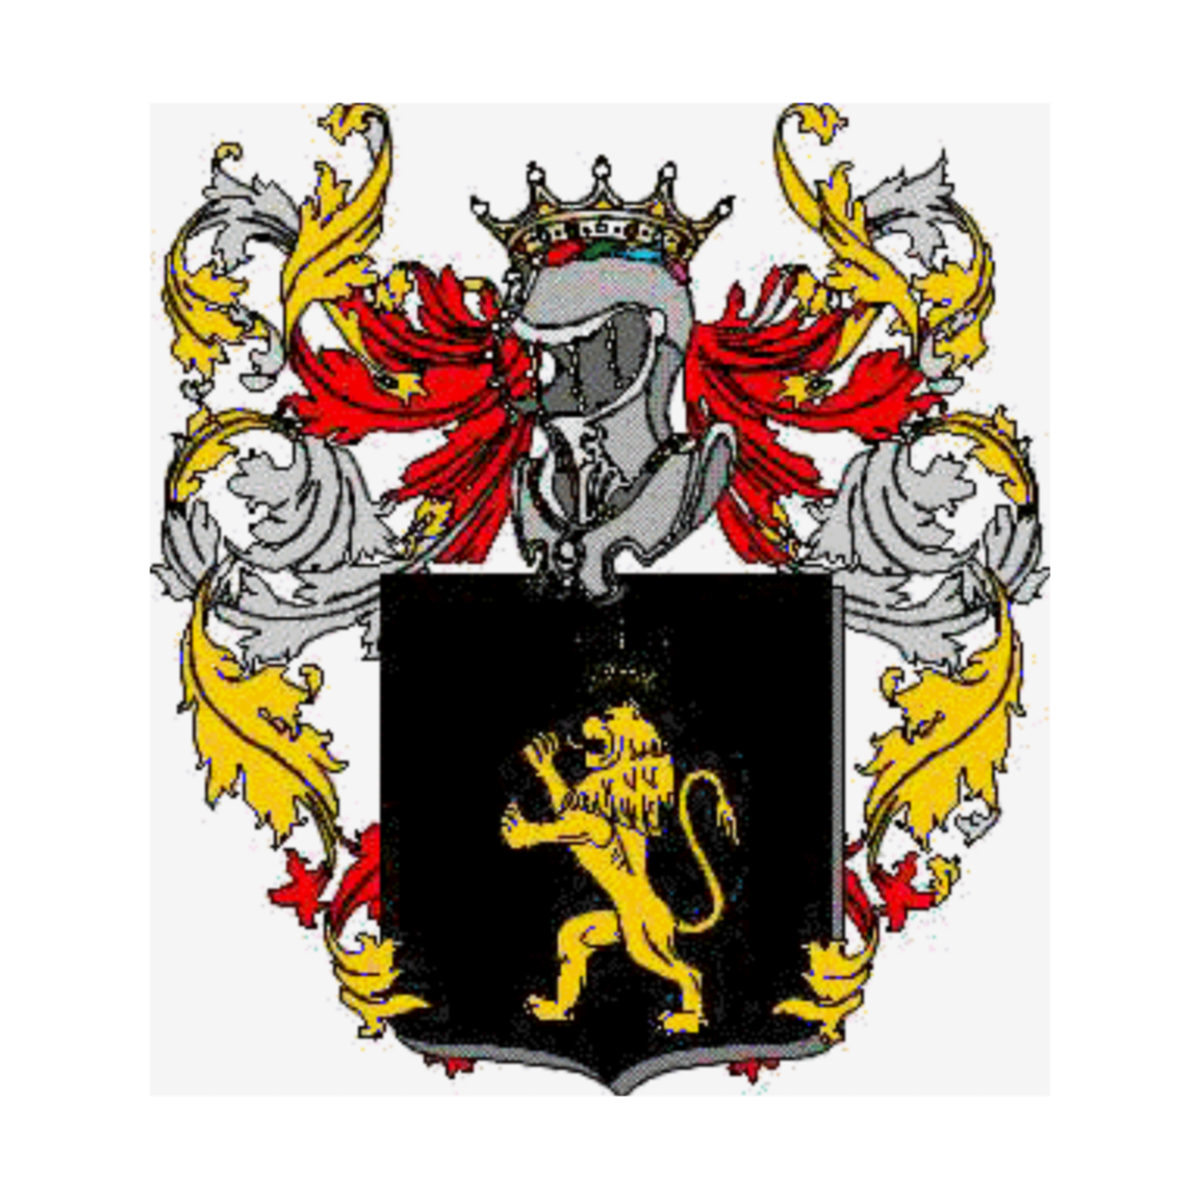 Wappen der Familie Rantonino